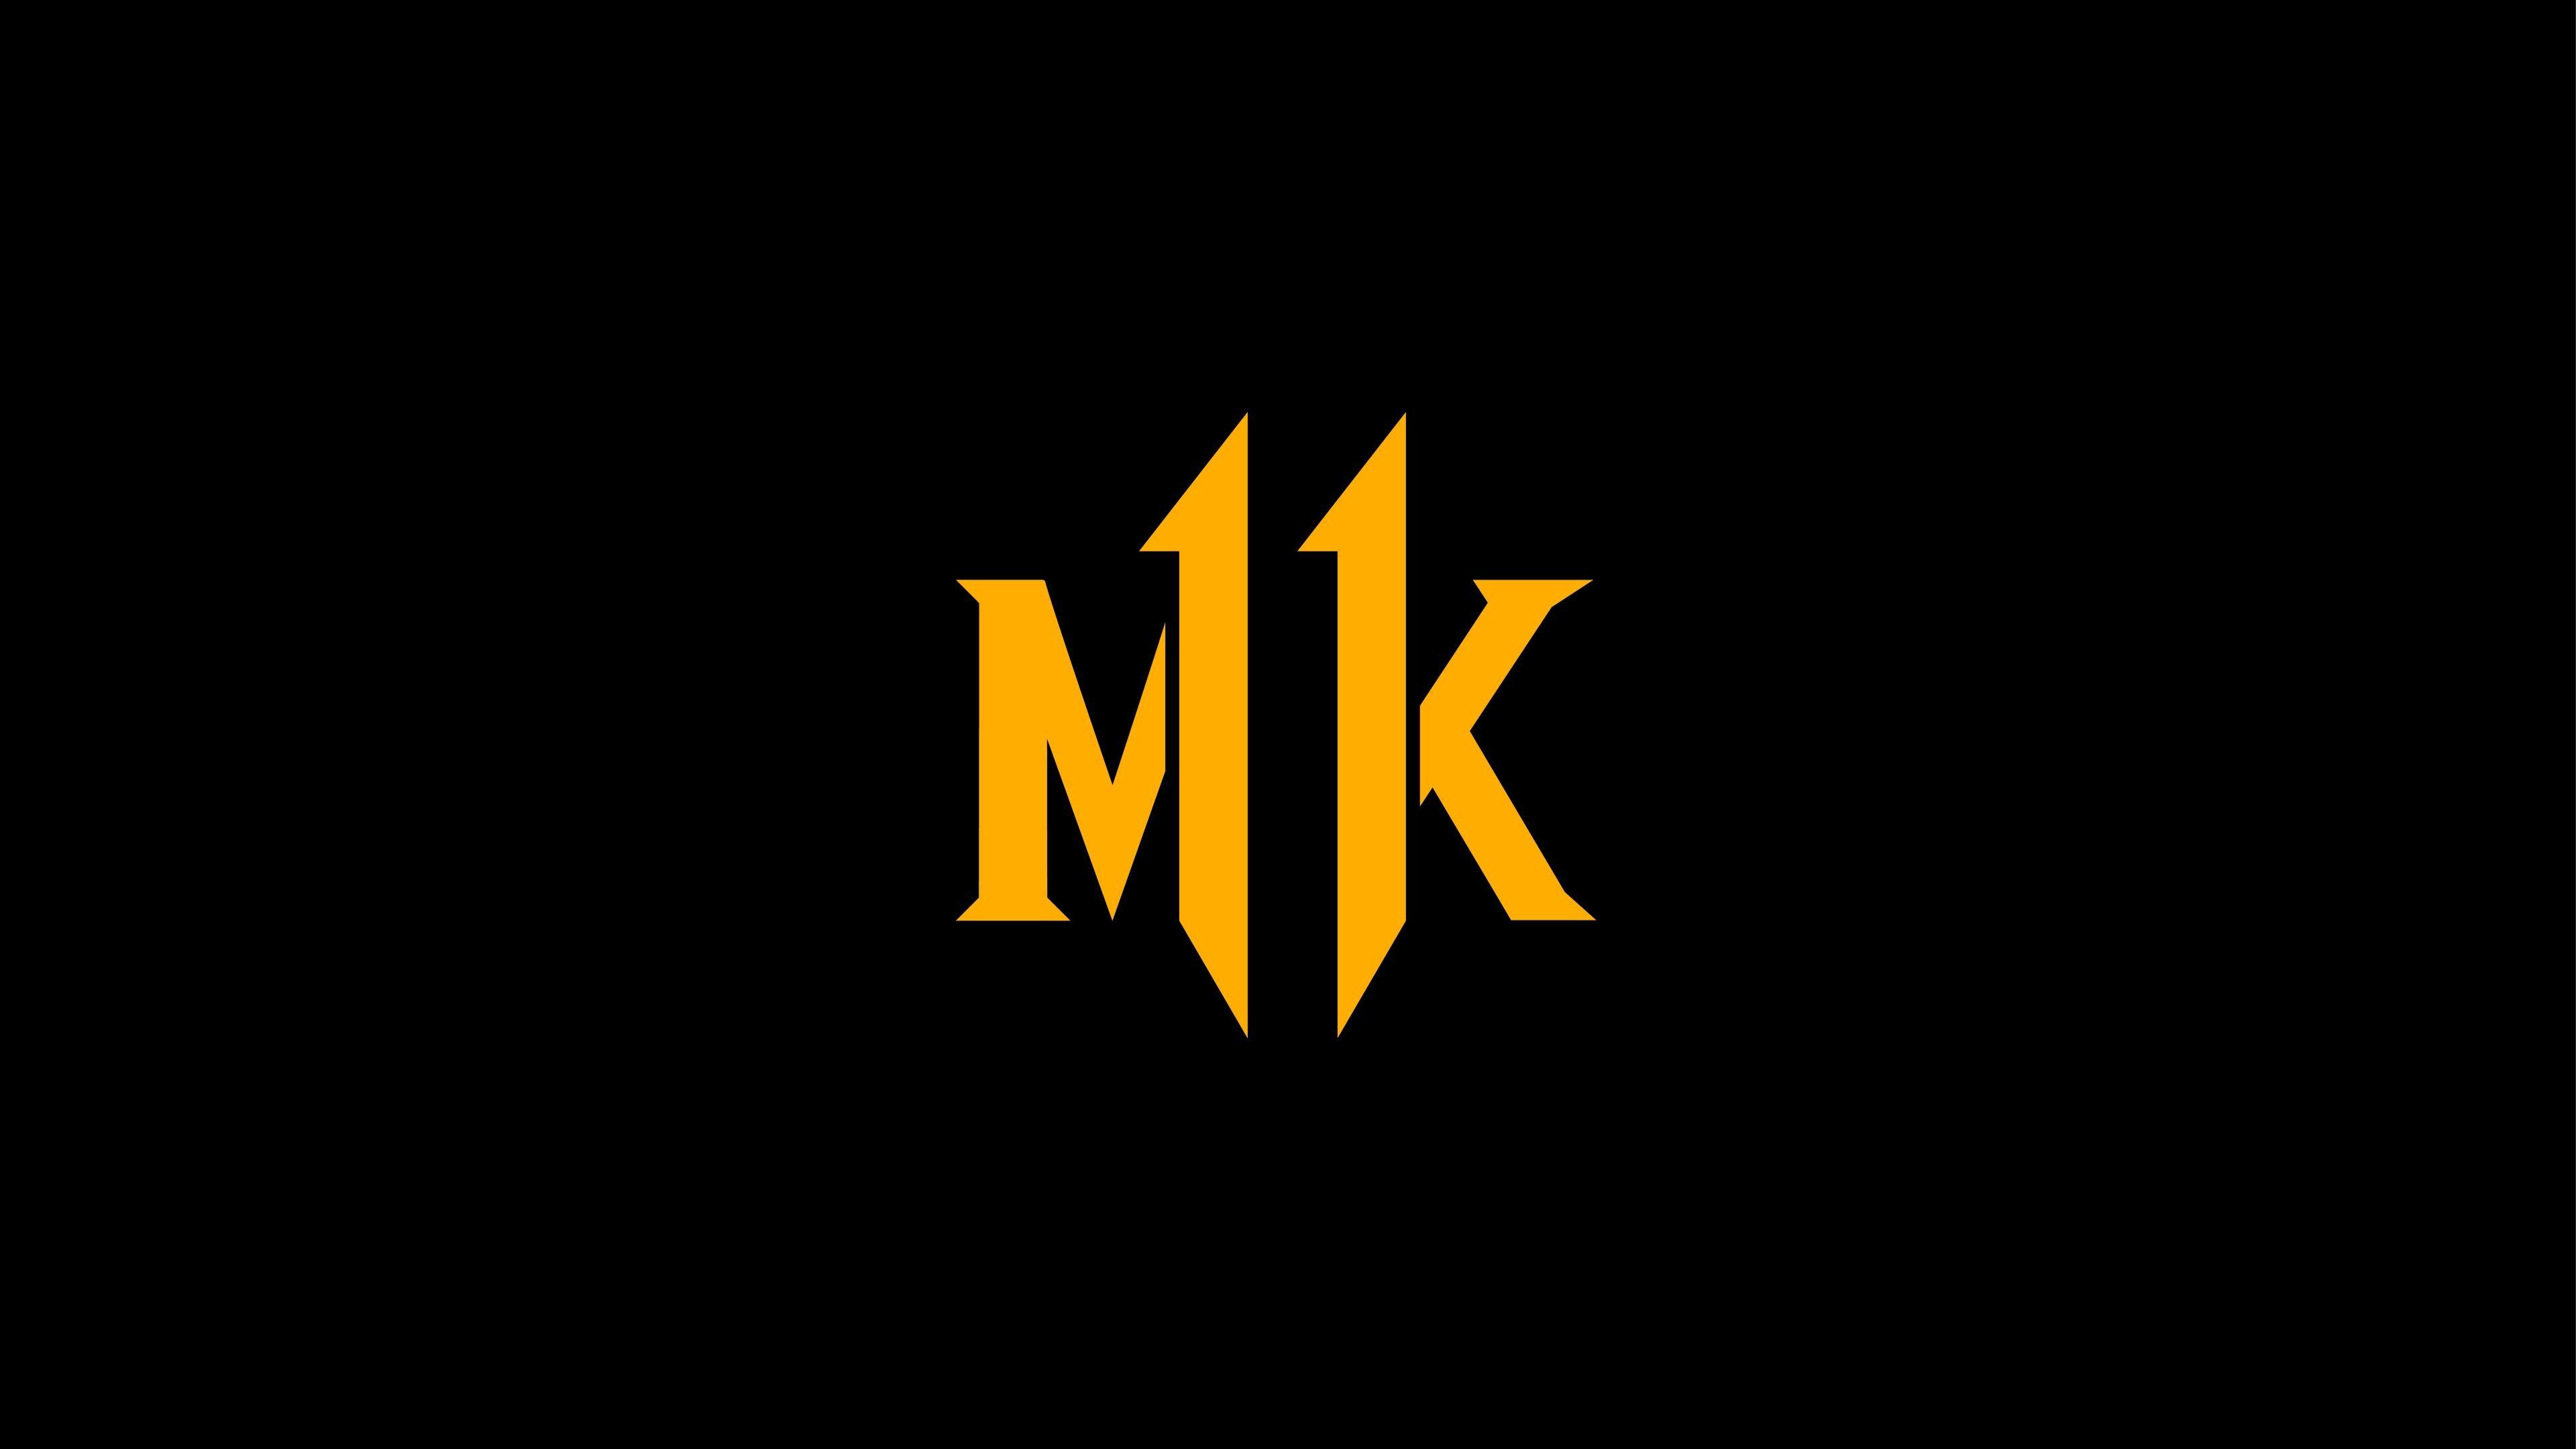 Michael Kors Logo Wallpapers - Top Free Michael Kors Logo Backgrounds